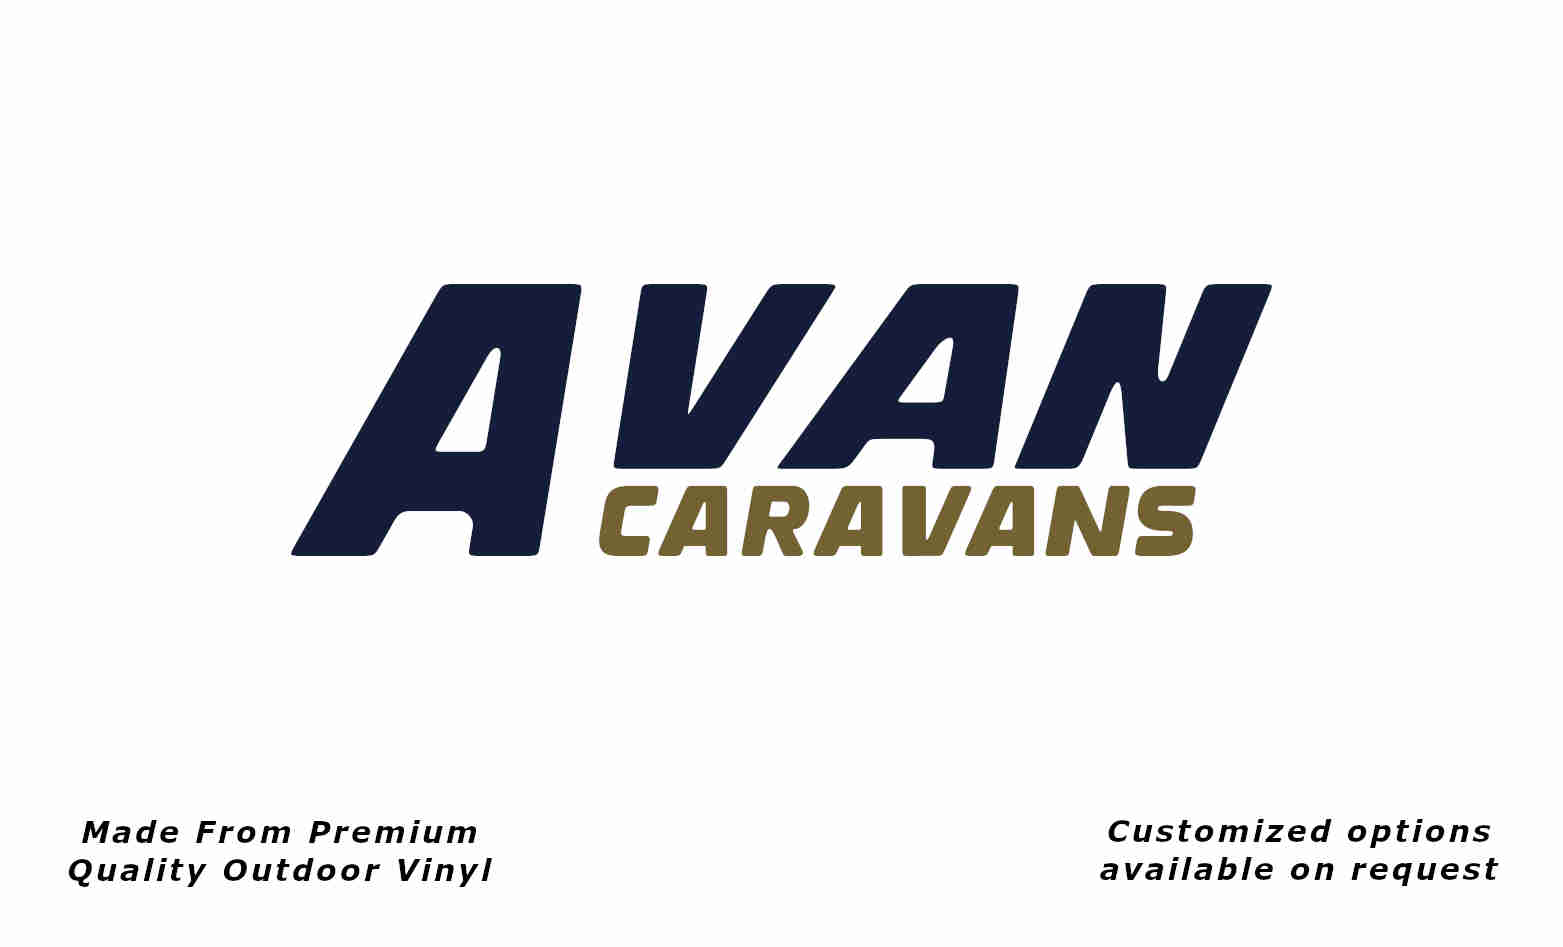 Avan caravans replacement vinyl decal sticker in deep sea blue and gold.